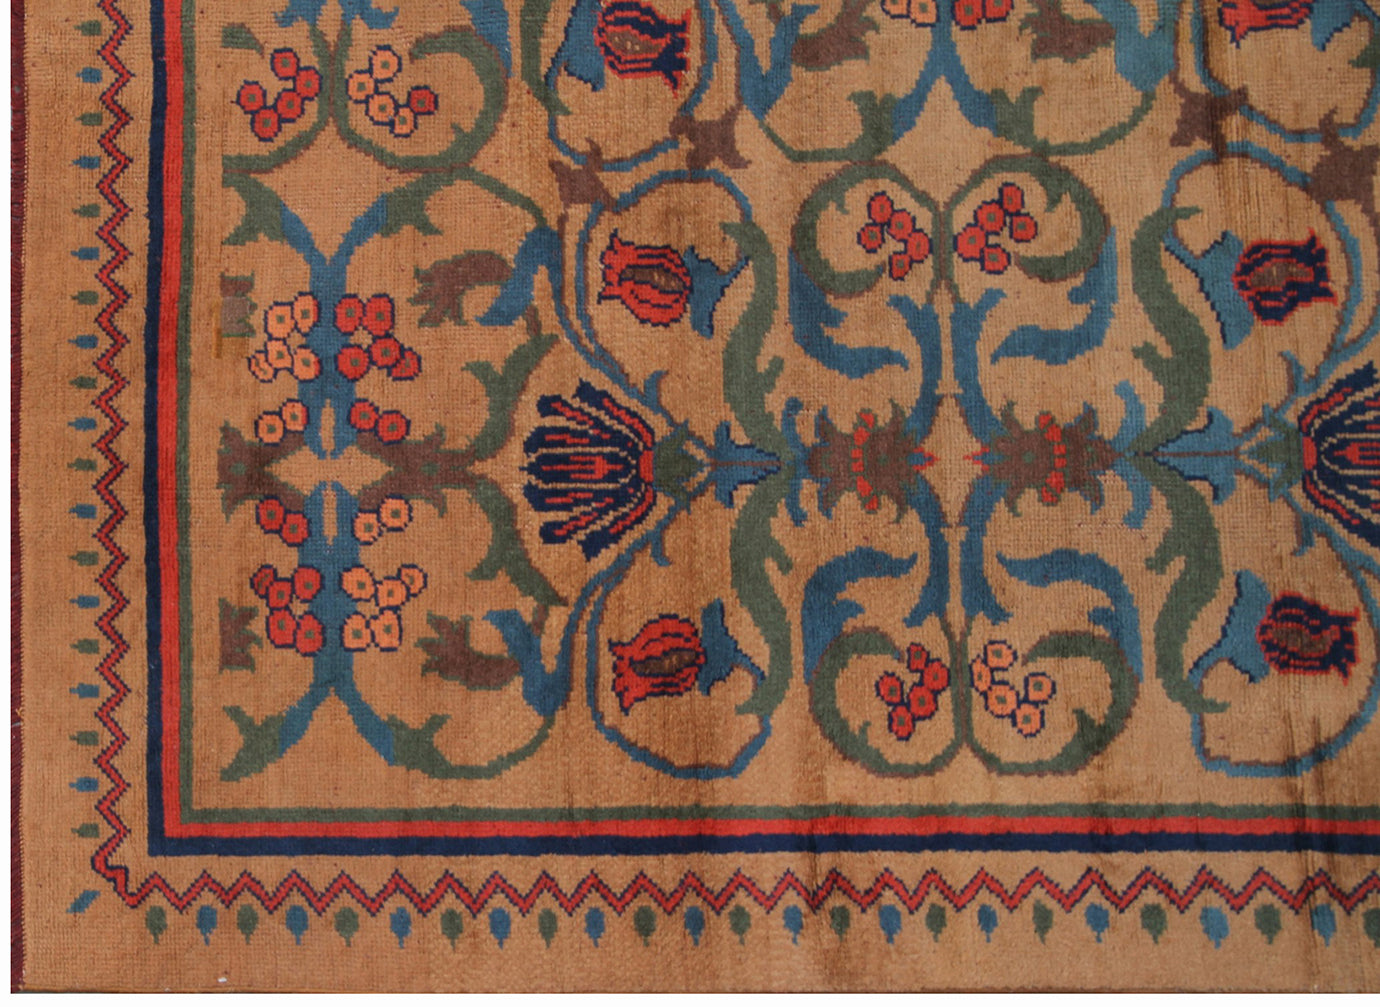 9'x13' Tan Brown Blue Floral Vintage English Art Deco Wool Rug